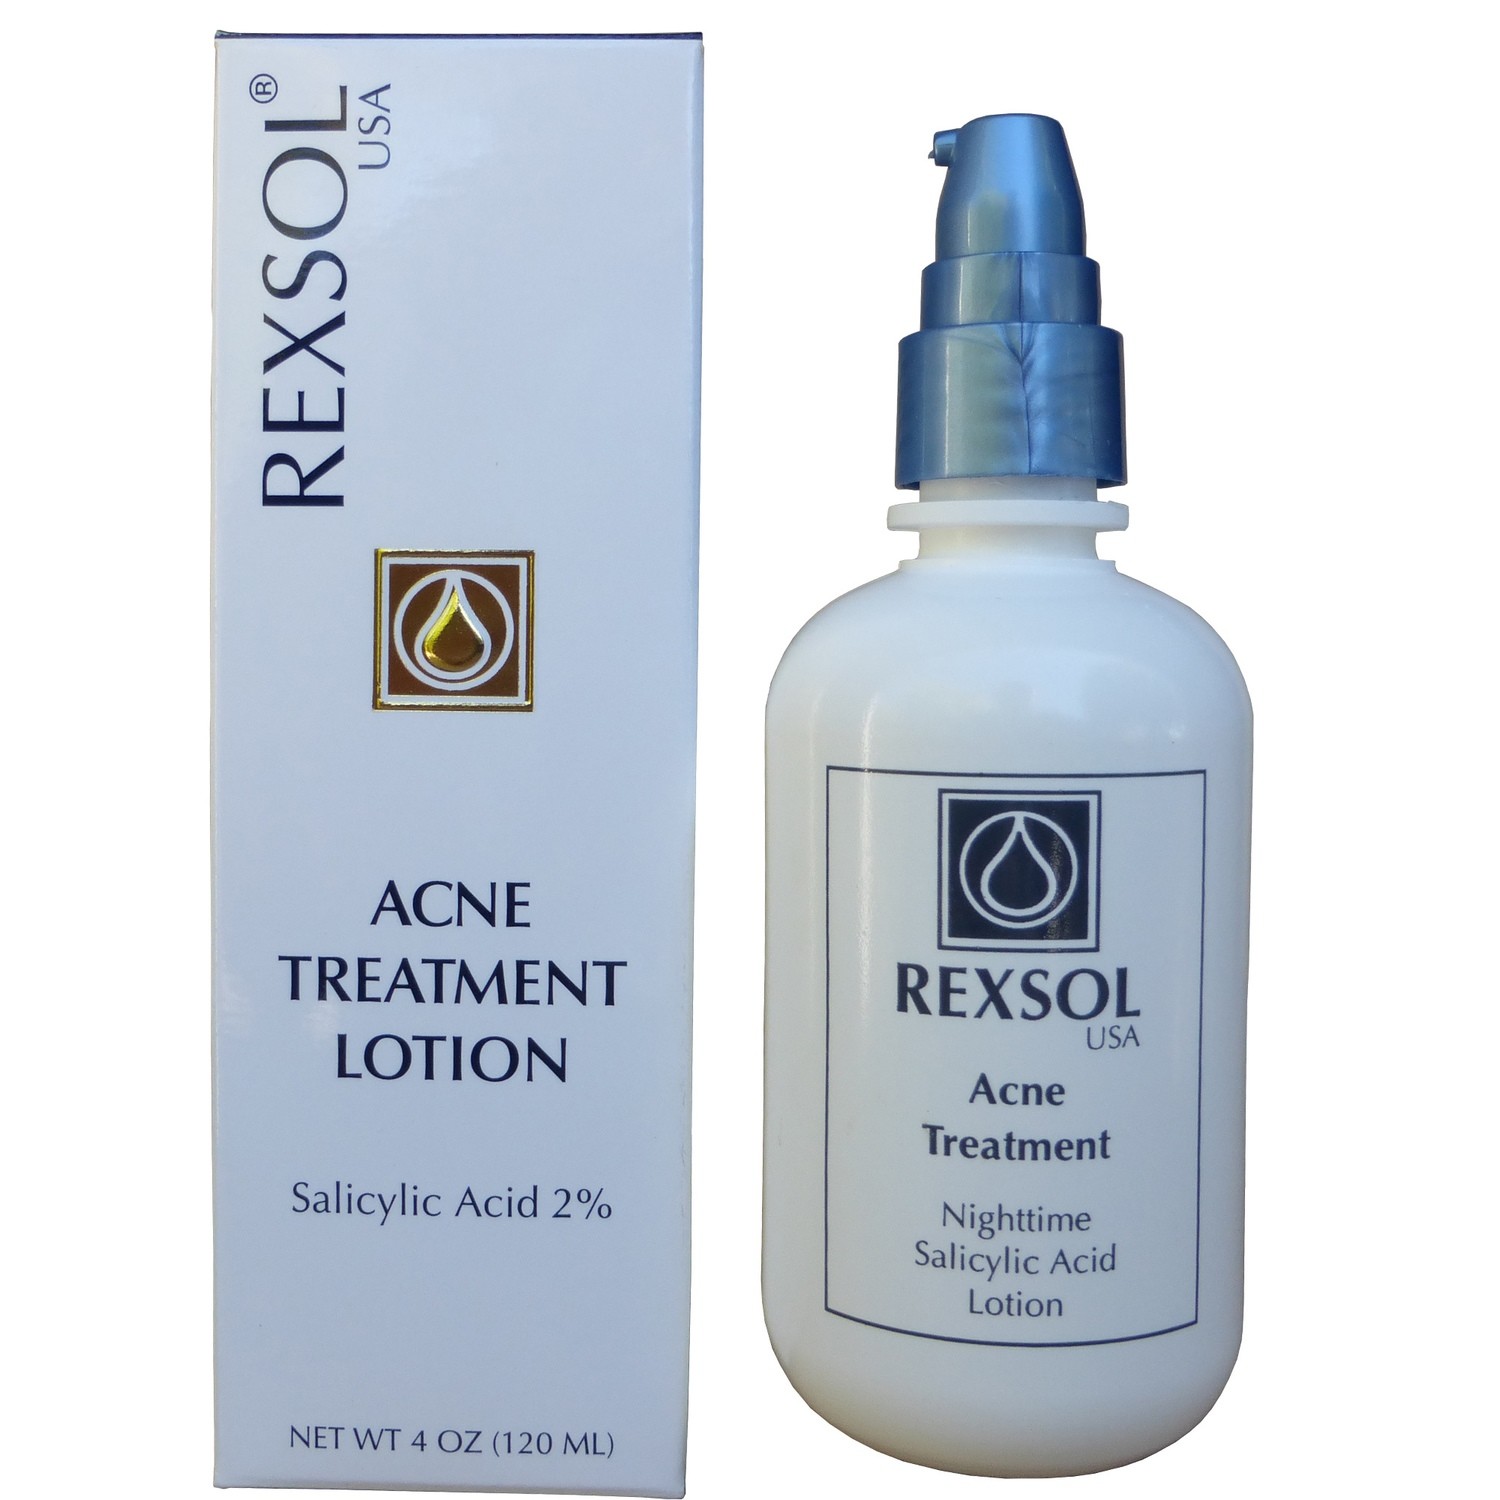 REXSOL Acne Treatment Lotion Nighttime Salicylic Acid Lotion